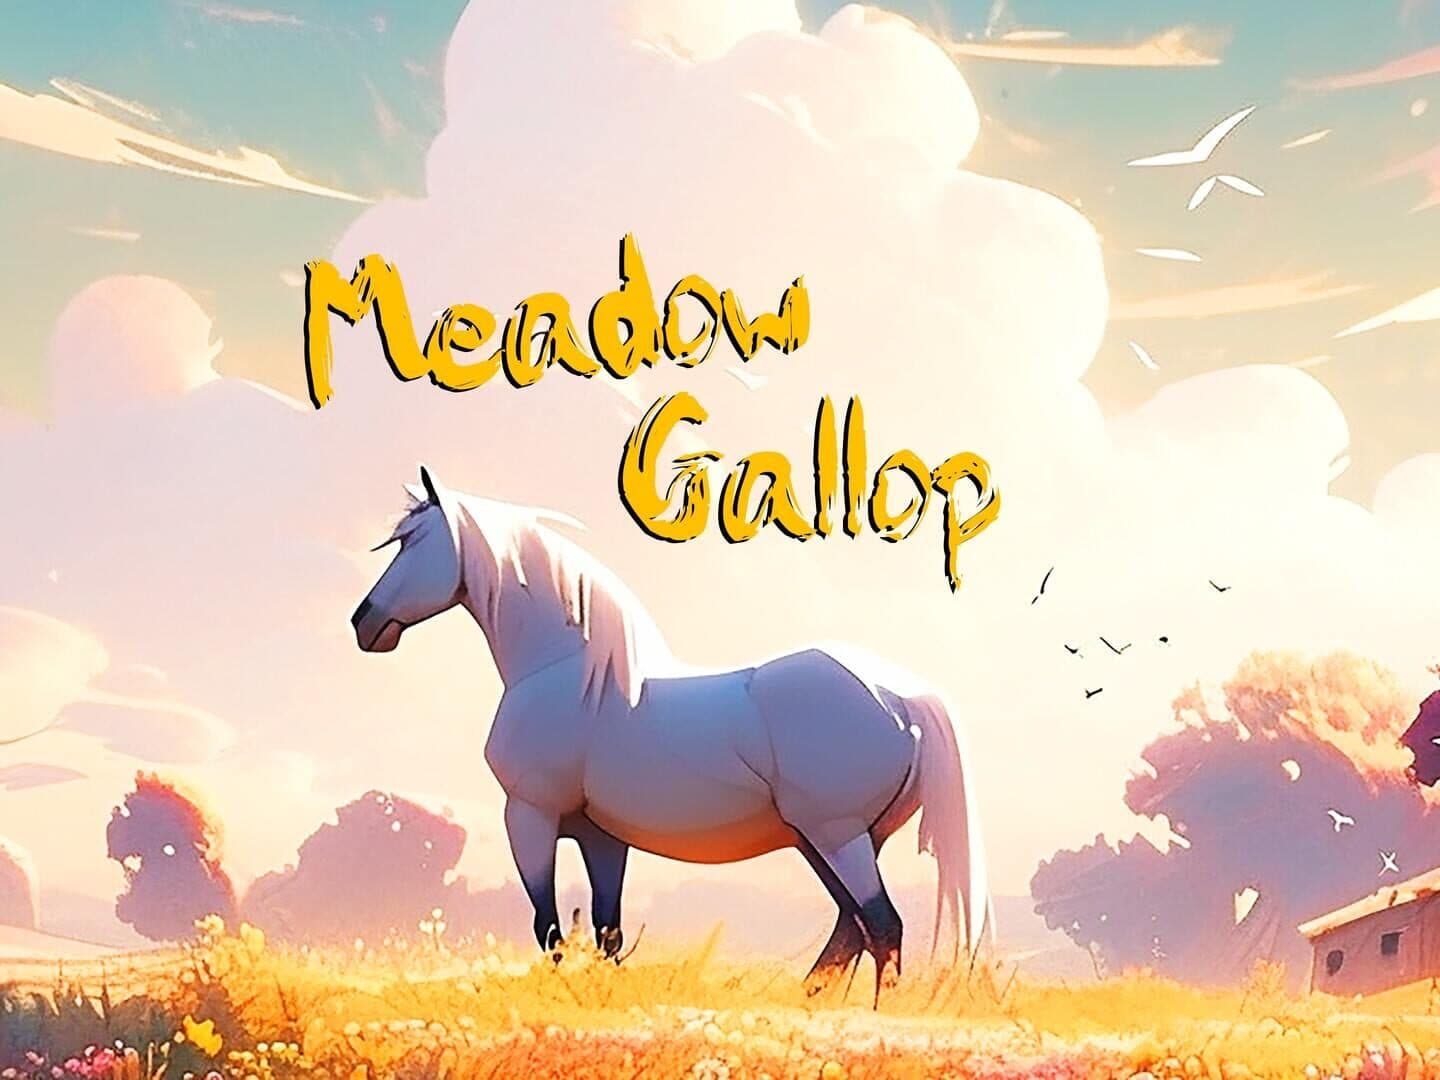 Meadow Gallop Image